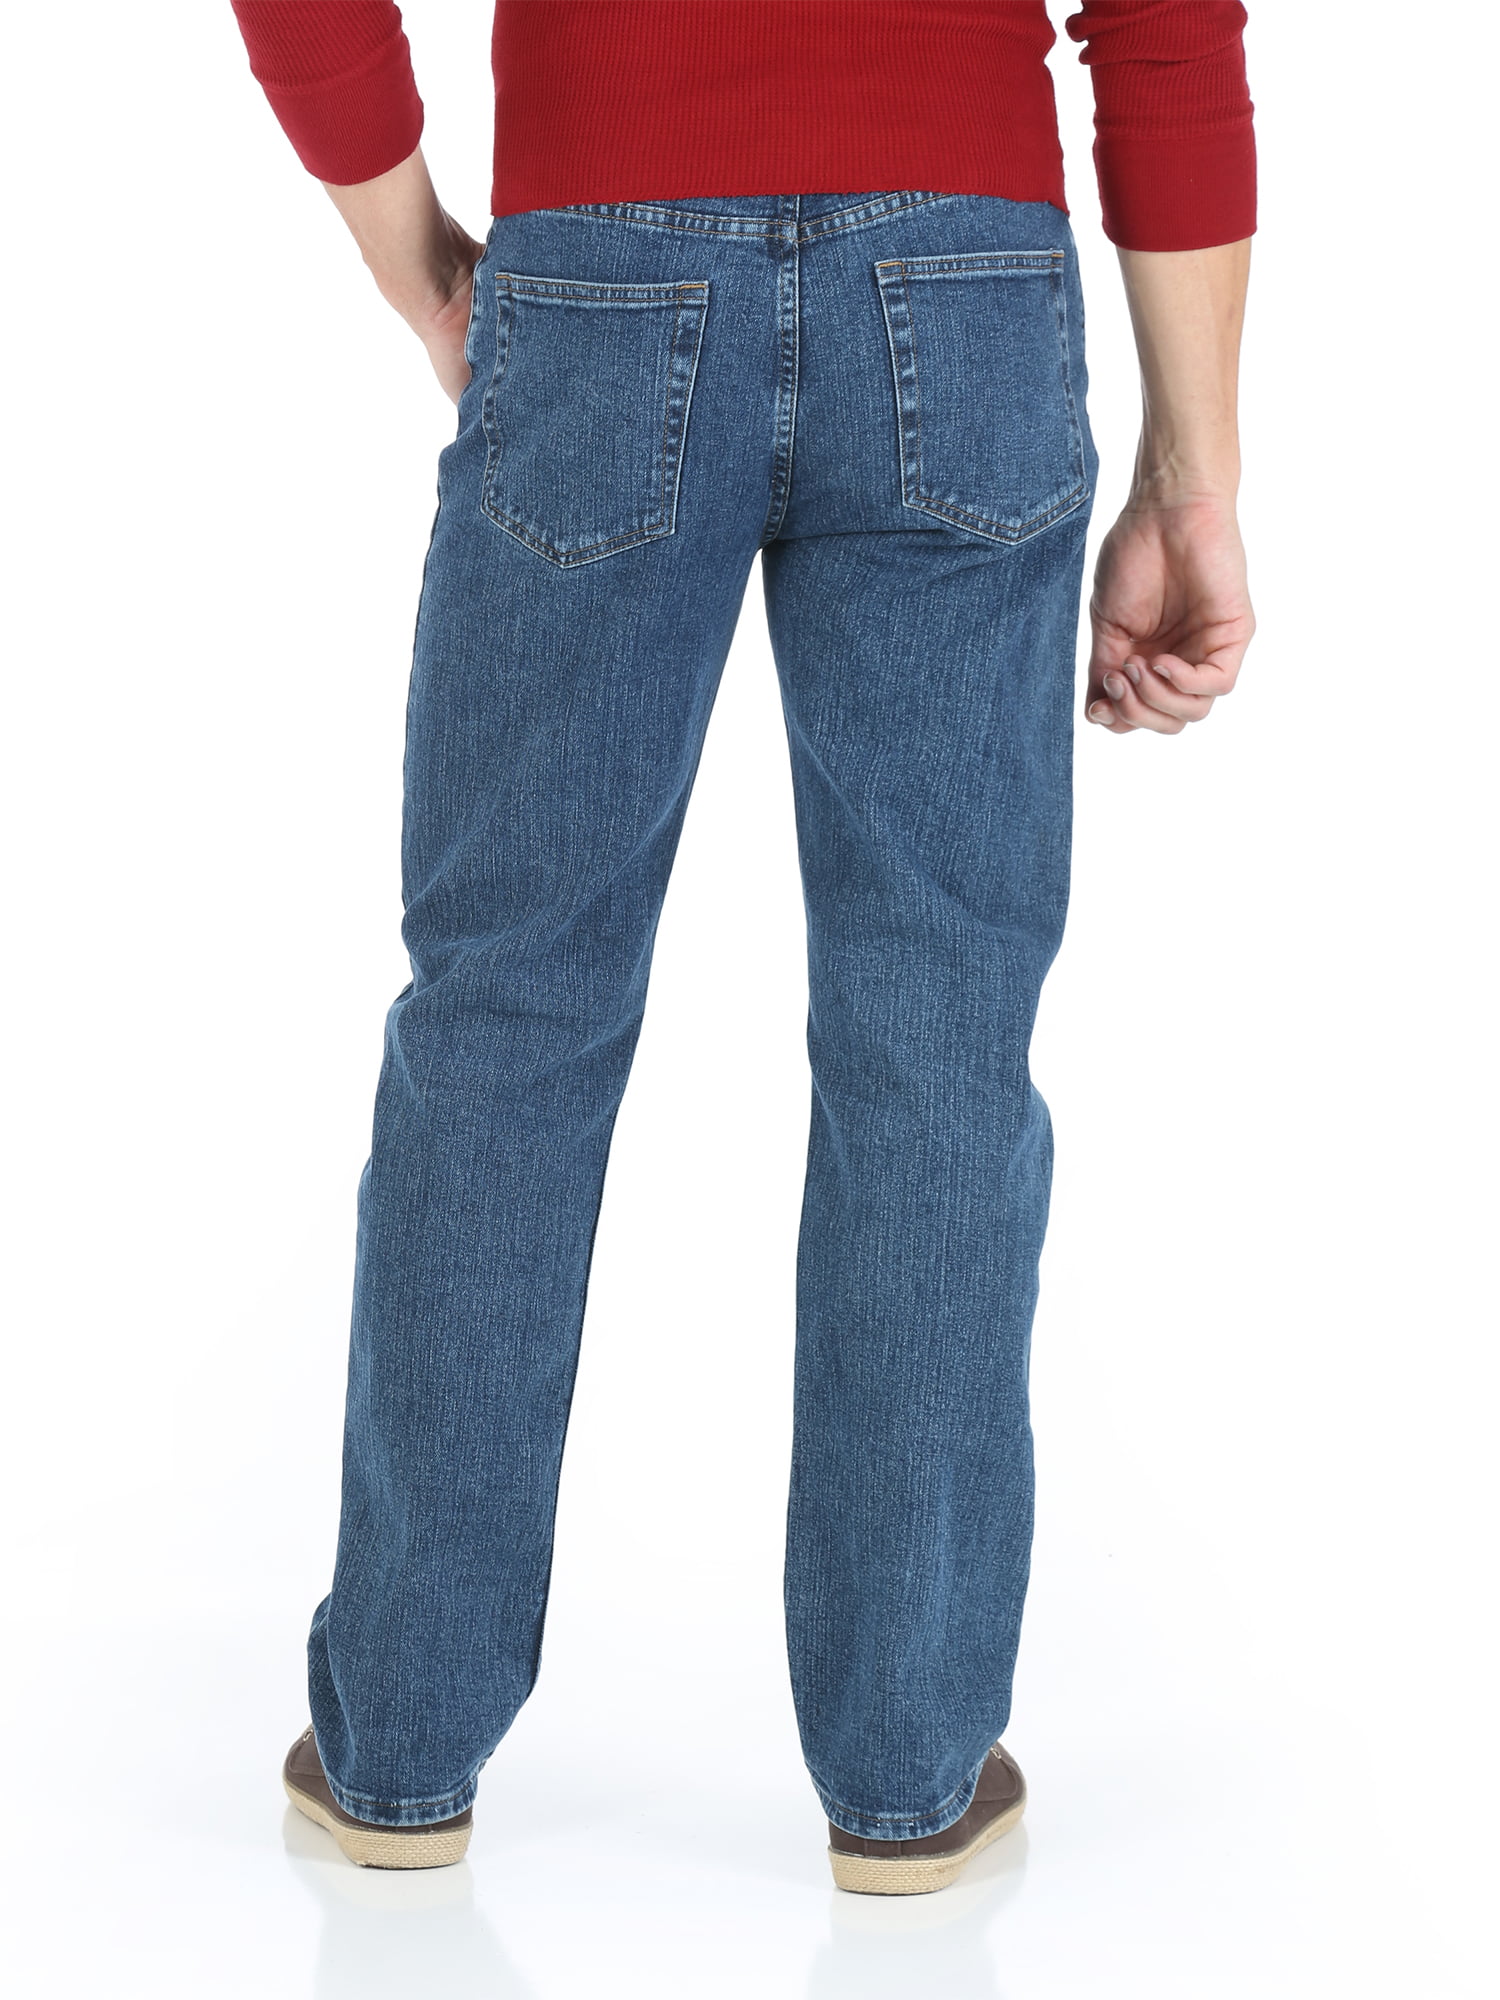 Men's Advanced Comfort Regular Fit Jean 